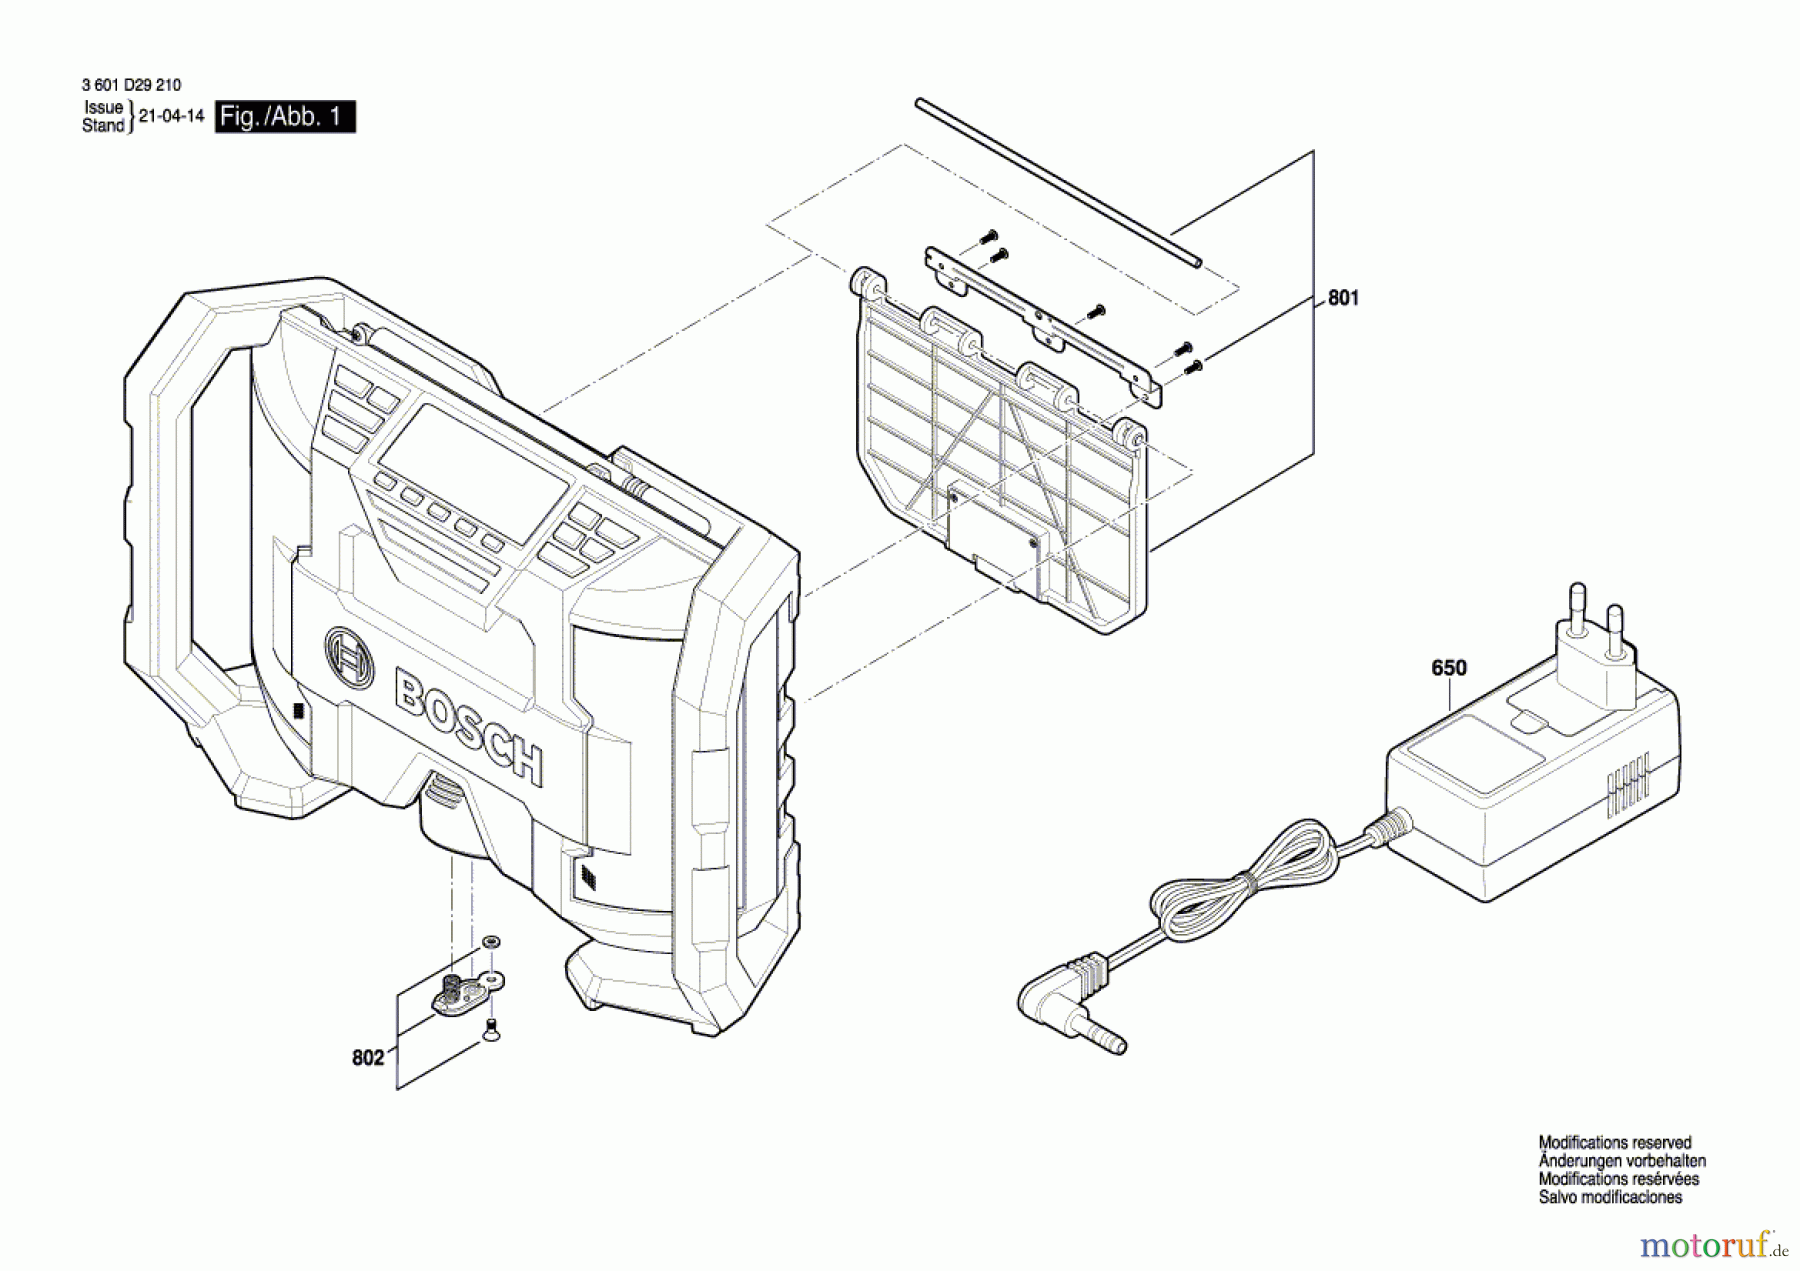  Bosch Werkzeug Power-Radiobox GML 10,8 V-LI Seite 1